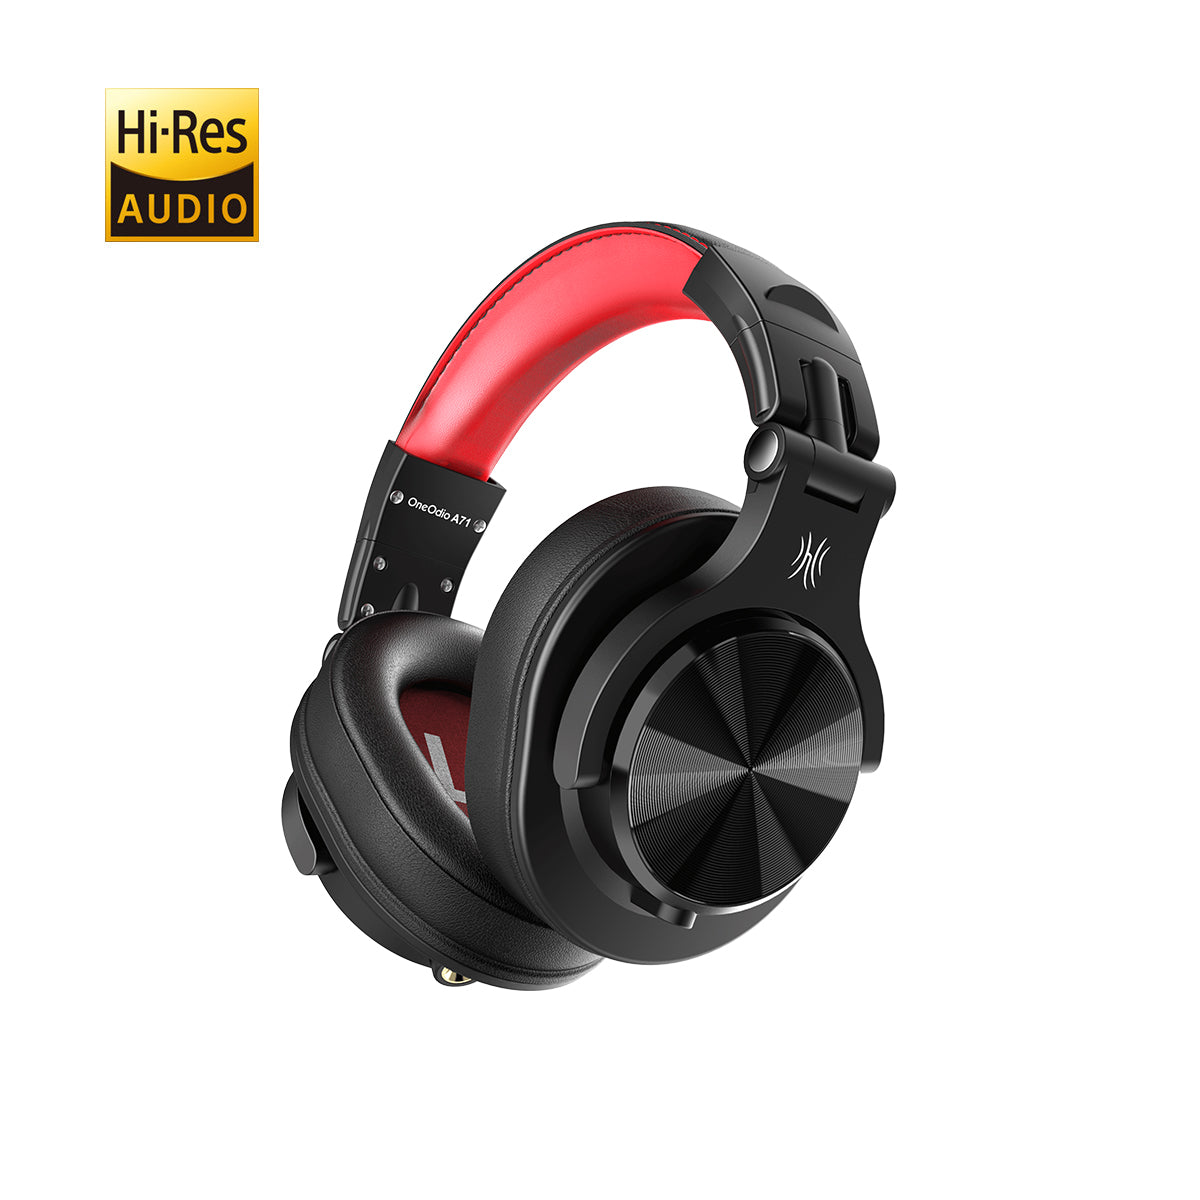 OneOdio® A71 Studio wired headphones